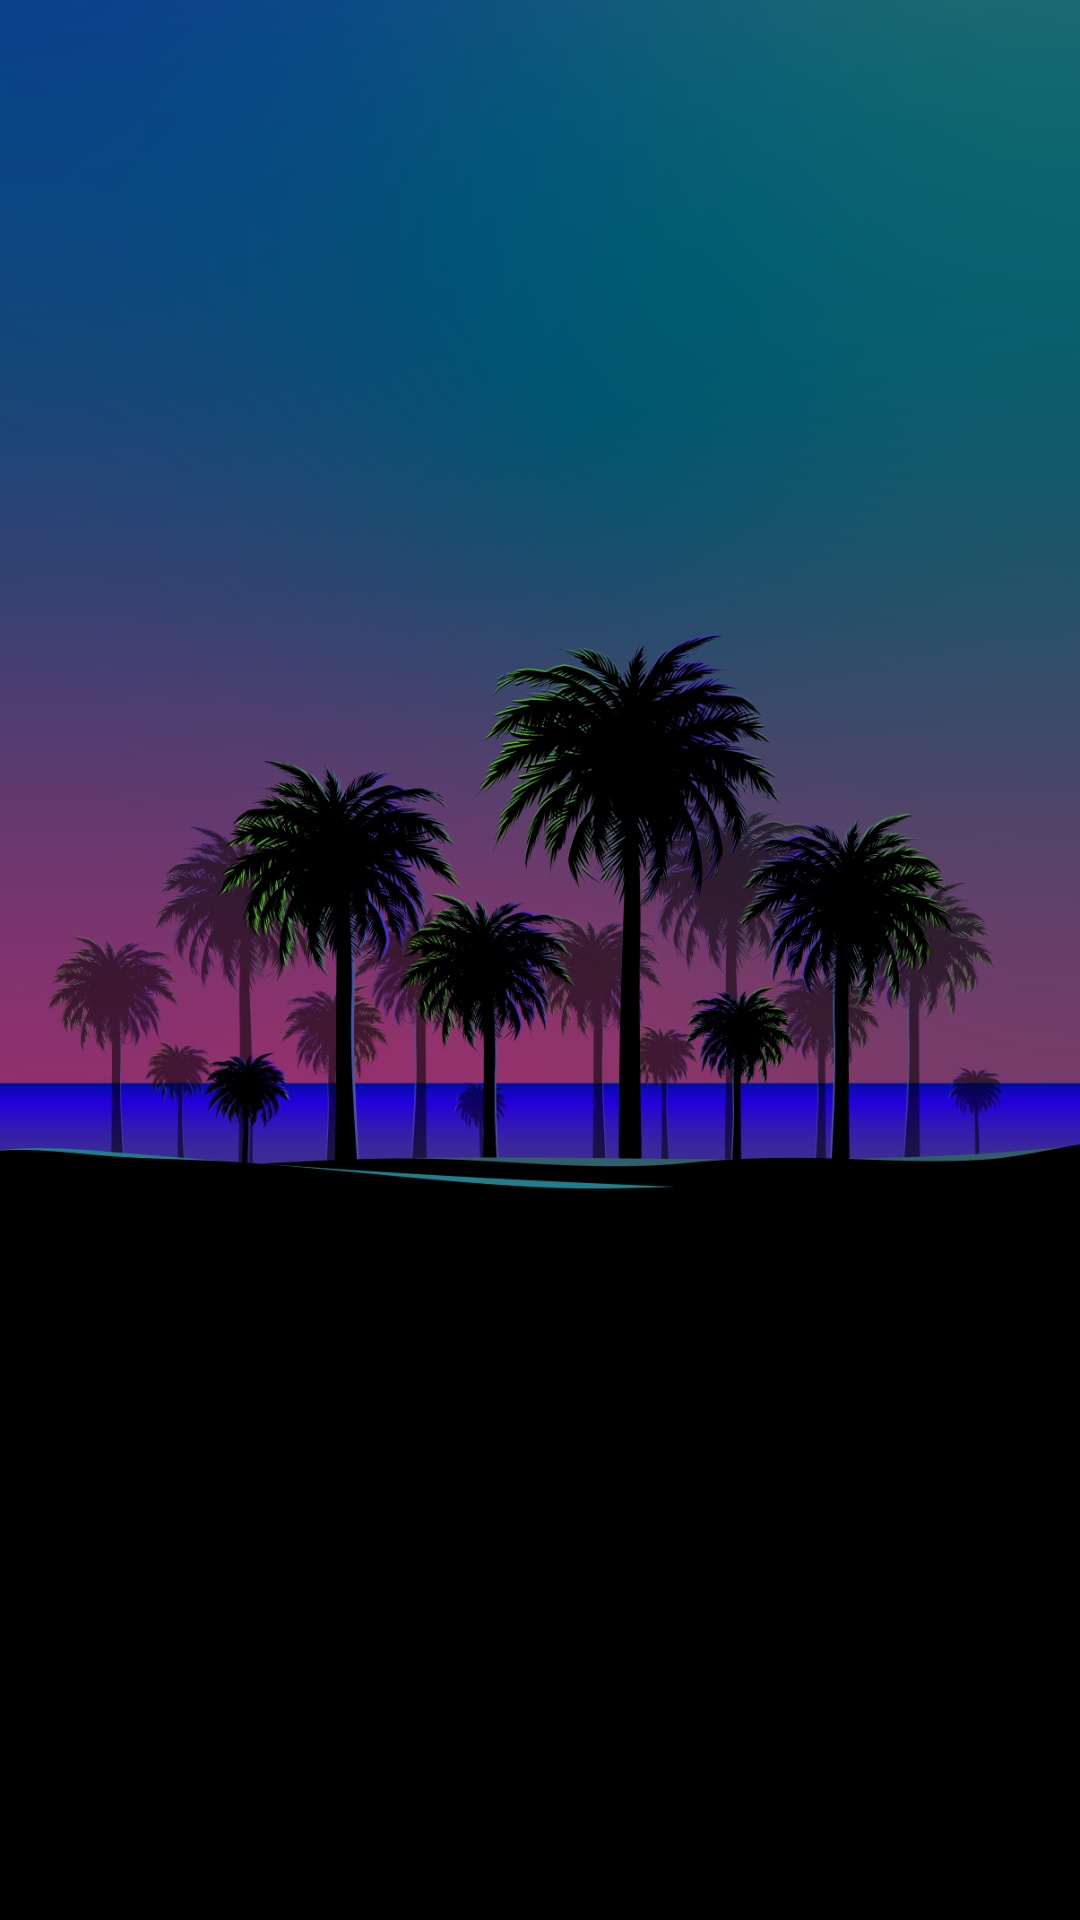 Palm Tree Sunset Background